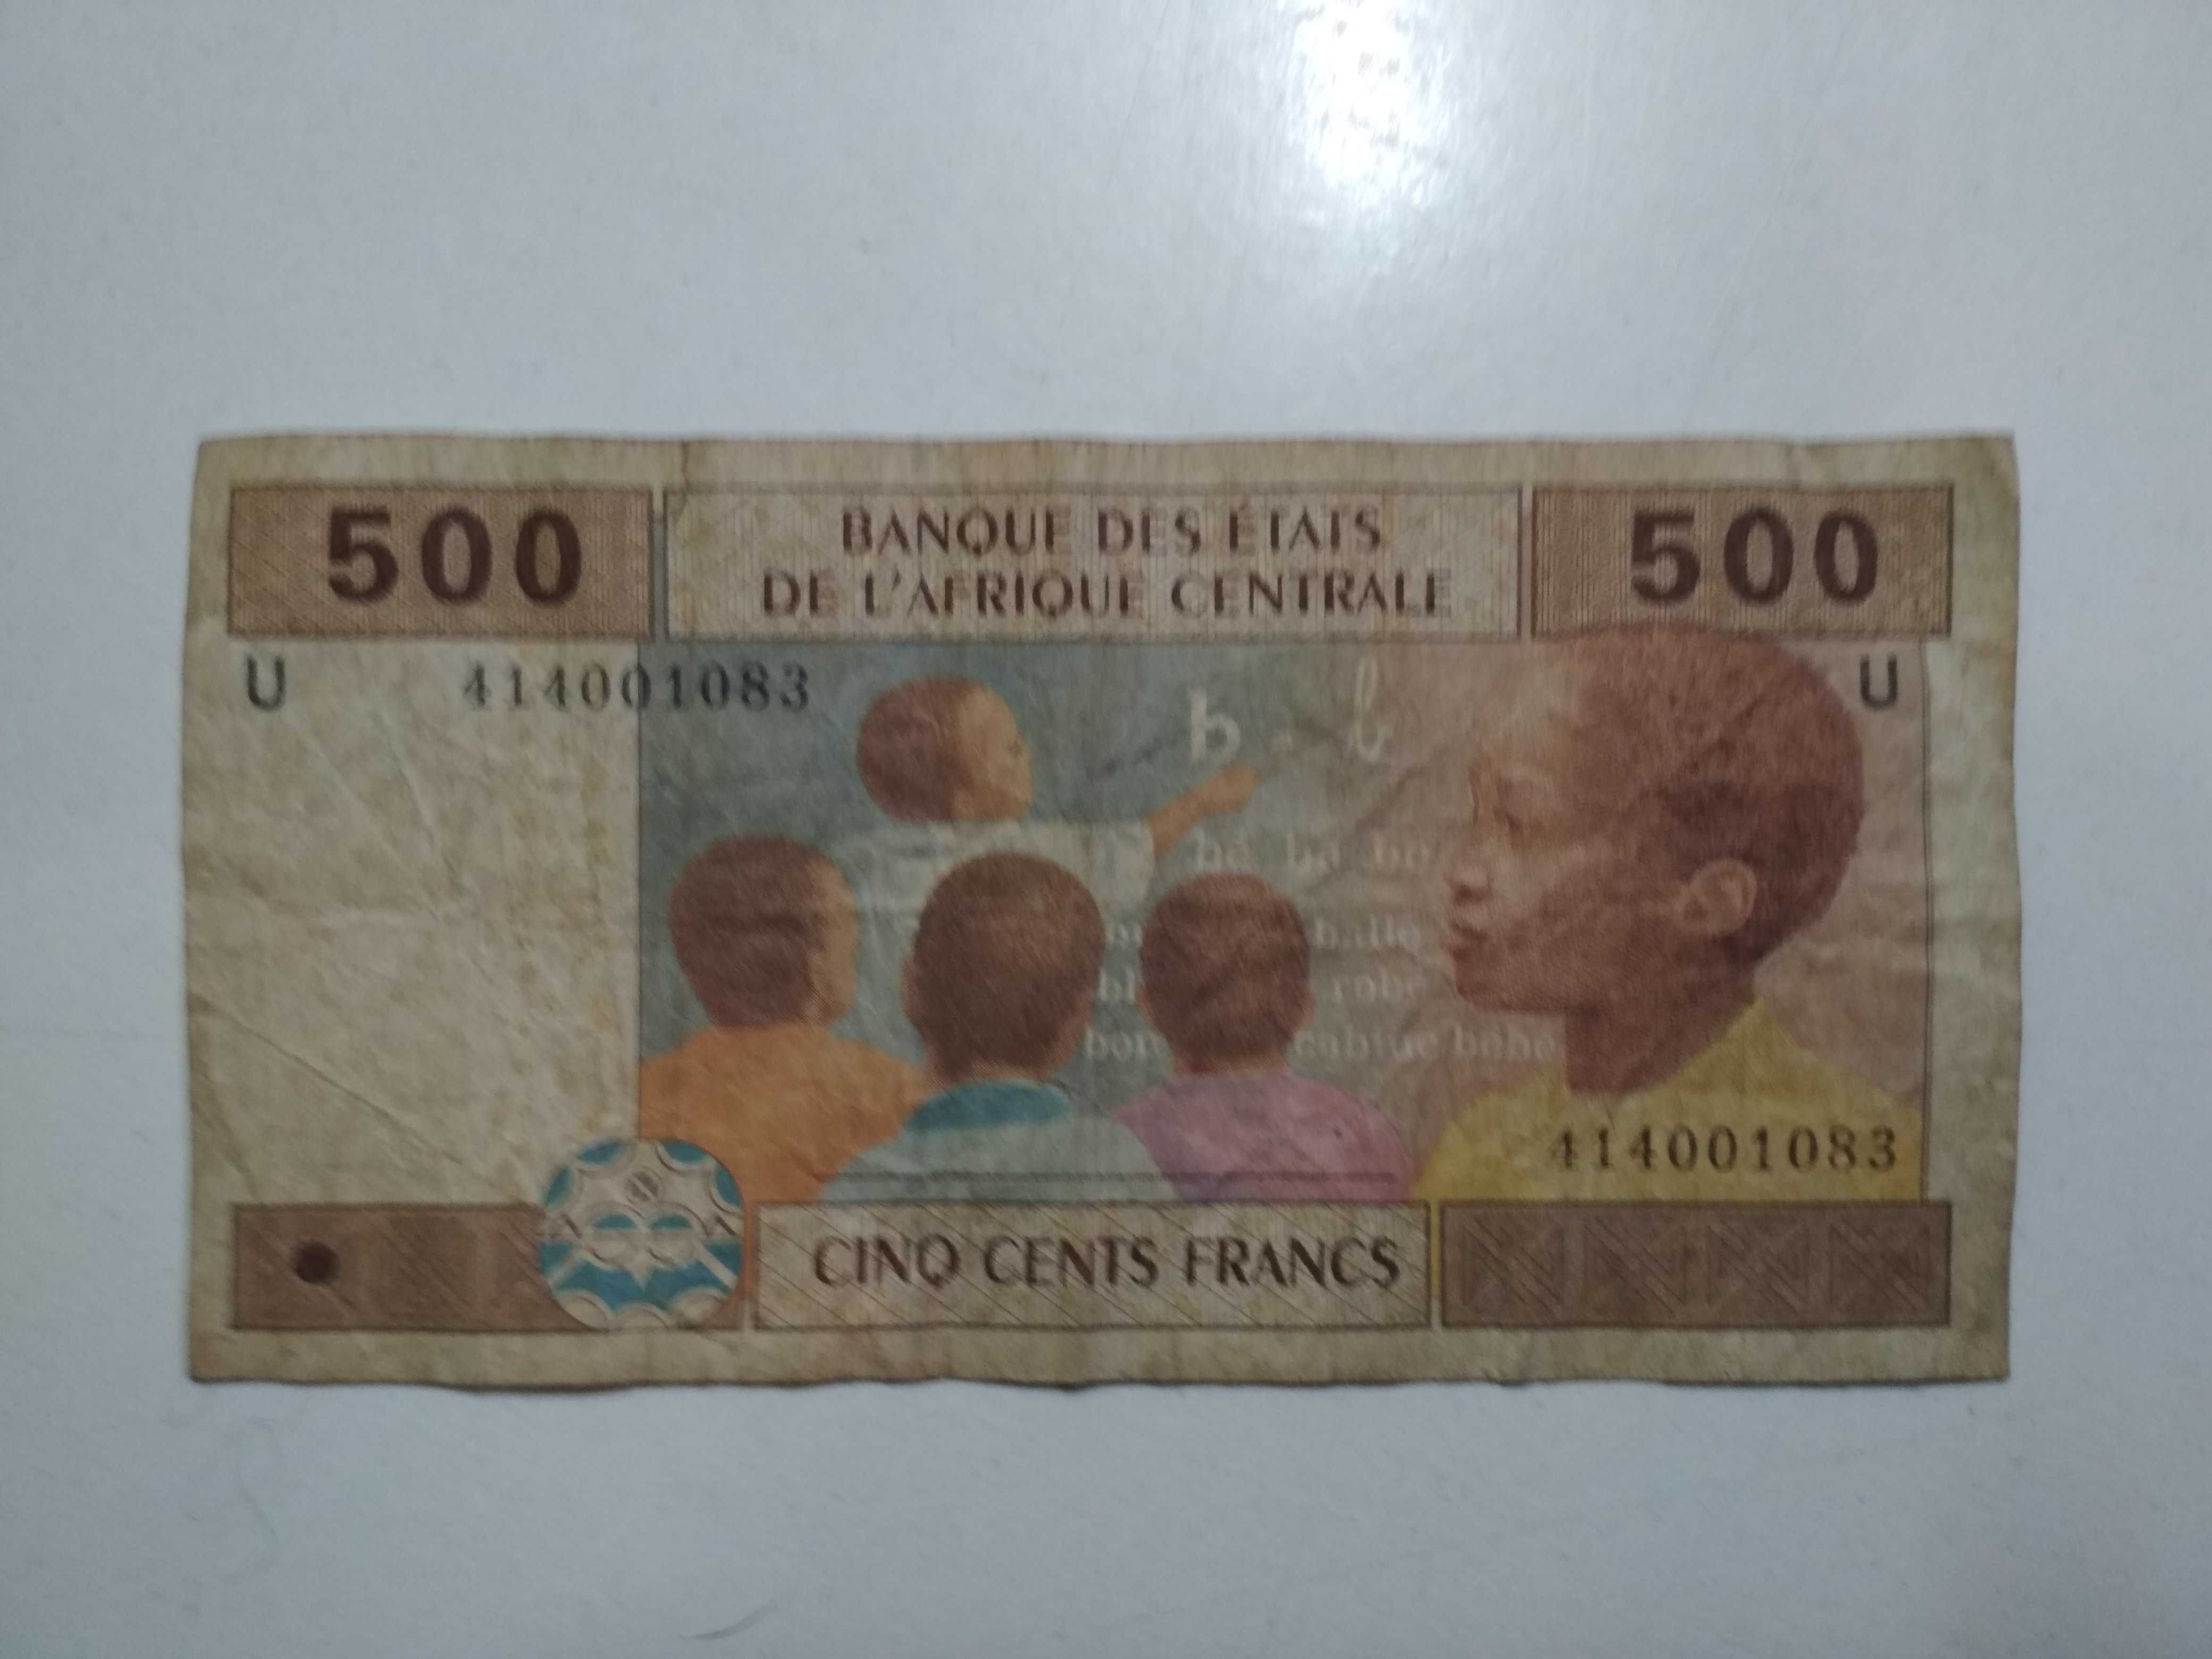 Banknot Republika Środkowoafrykańska Afryka Centralna 500 franków